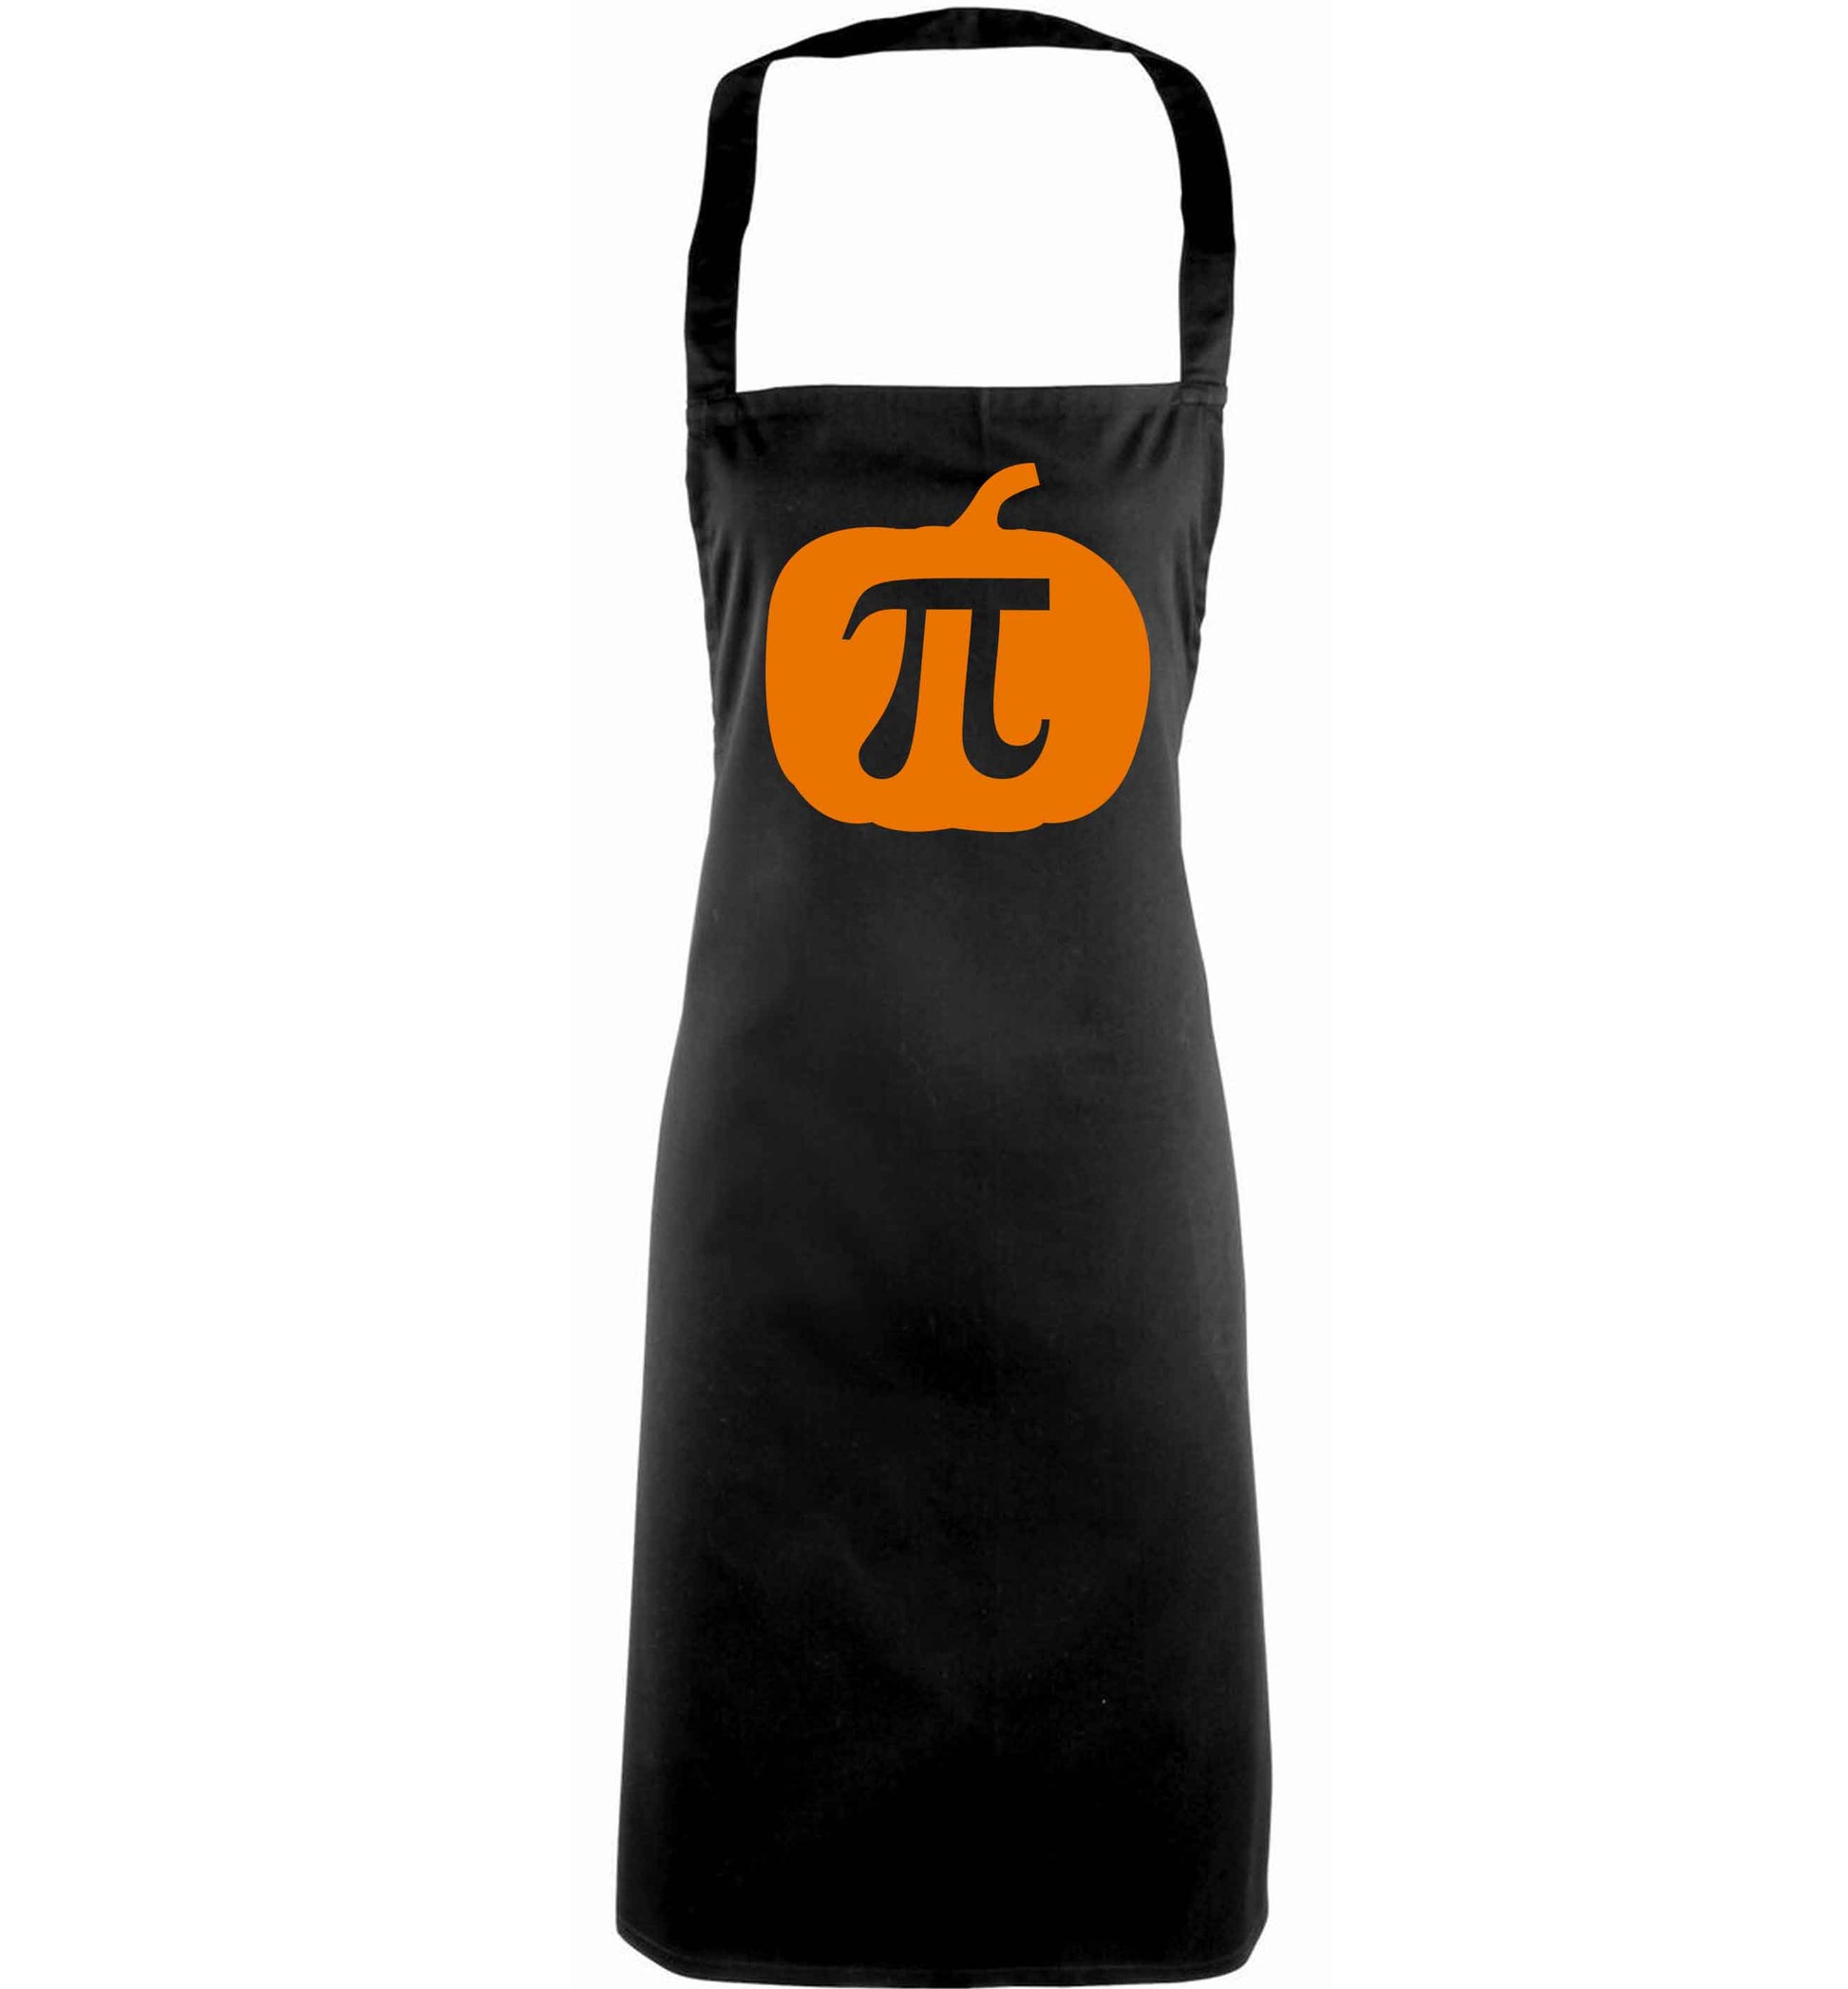 Pumpkin Pie adults black apron